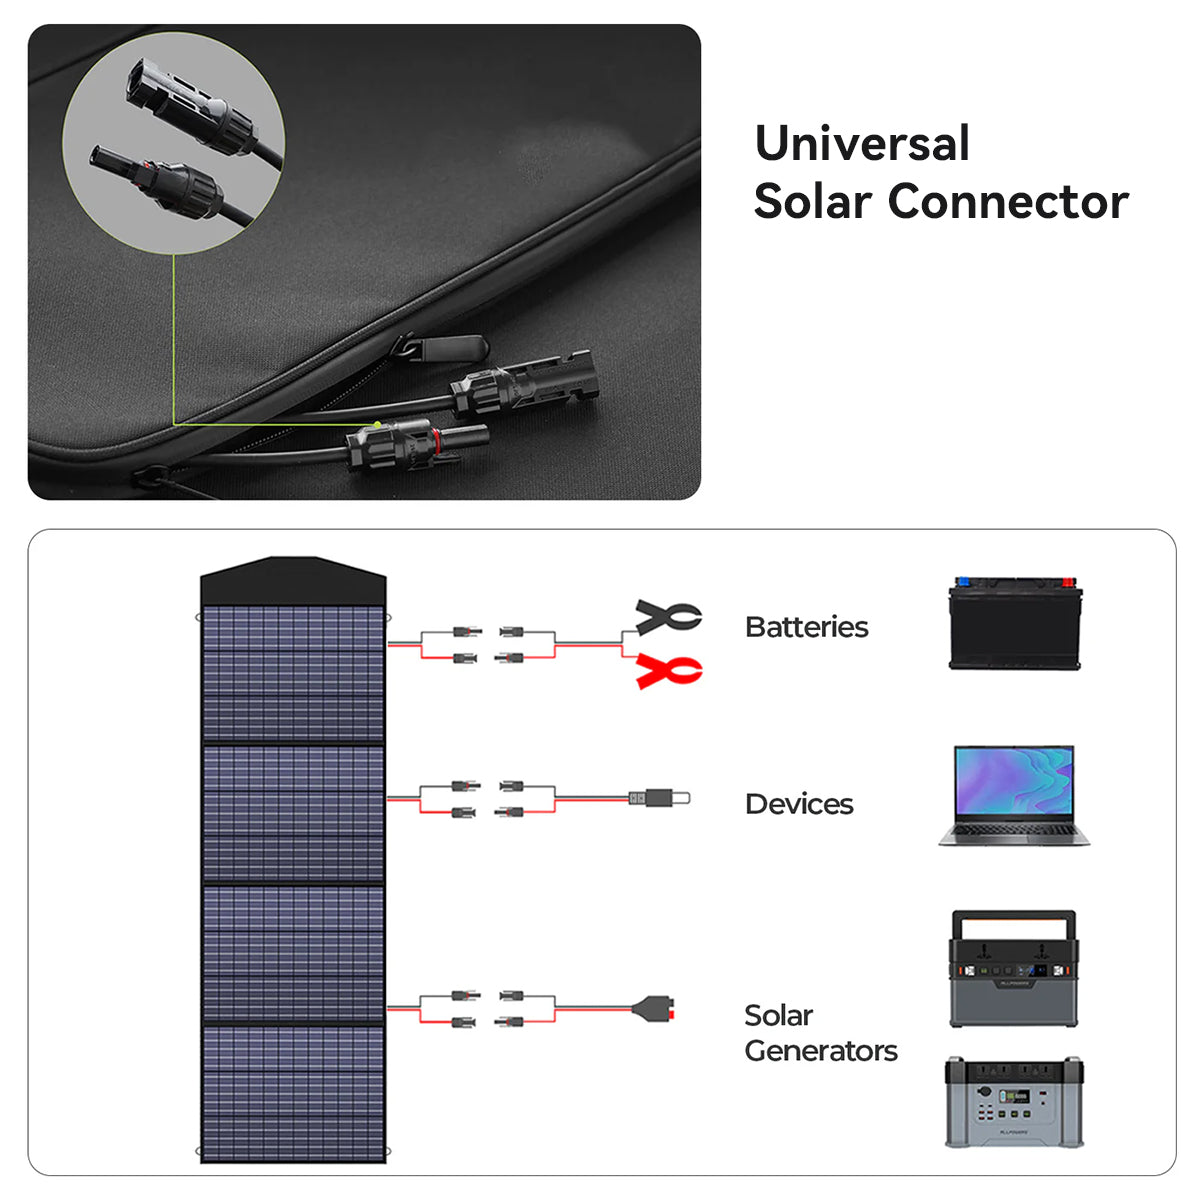 sp033-universal-solar-connector.jpg